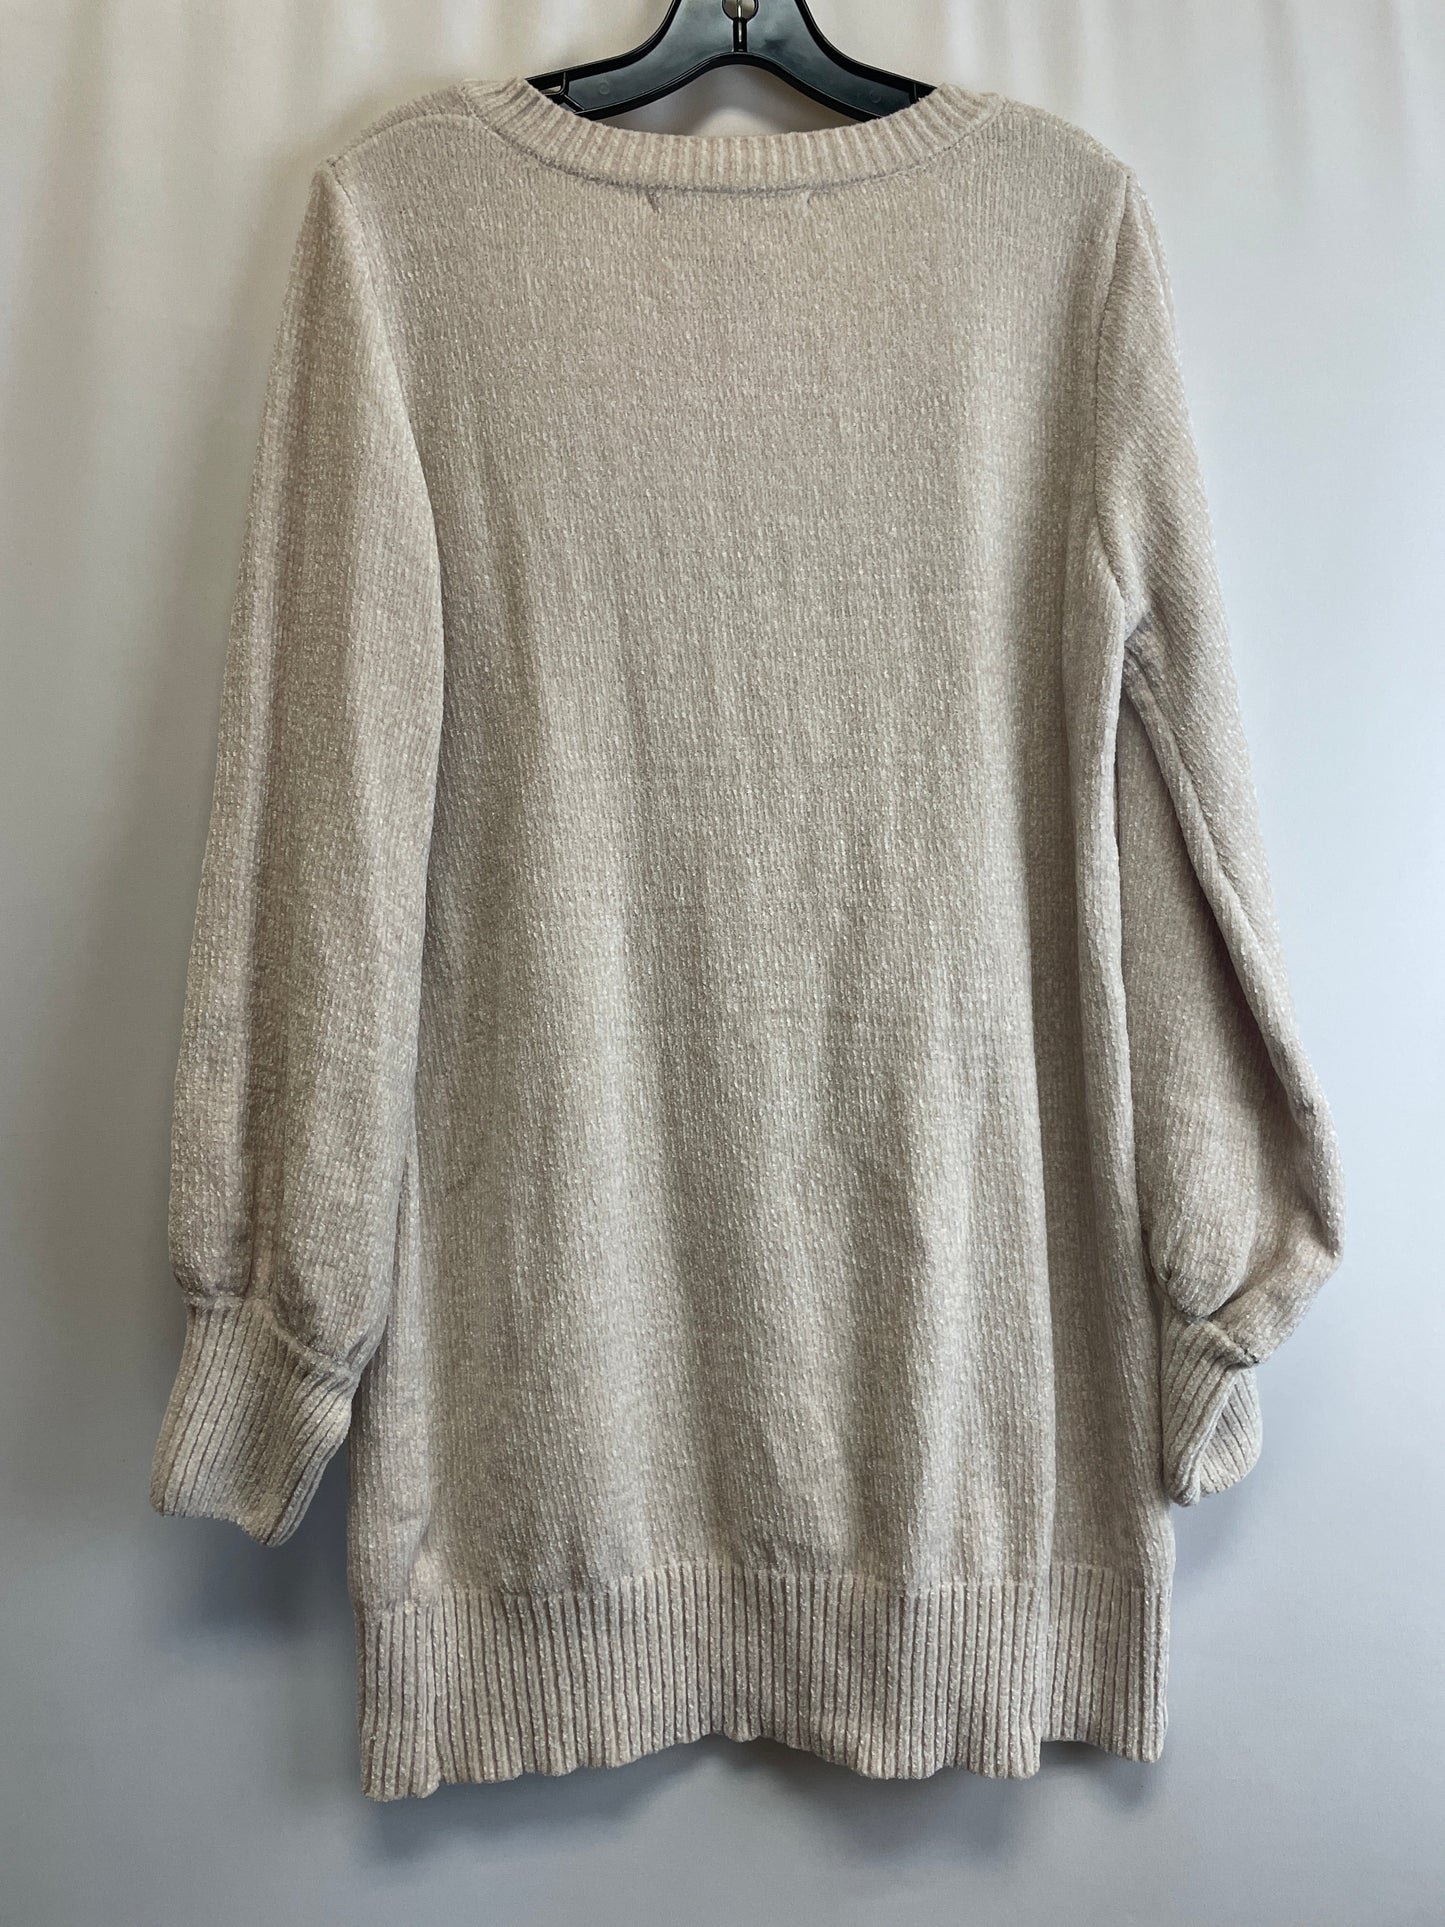 Sweater By Hyfve  Size: L